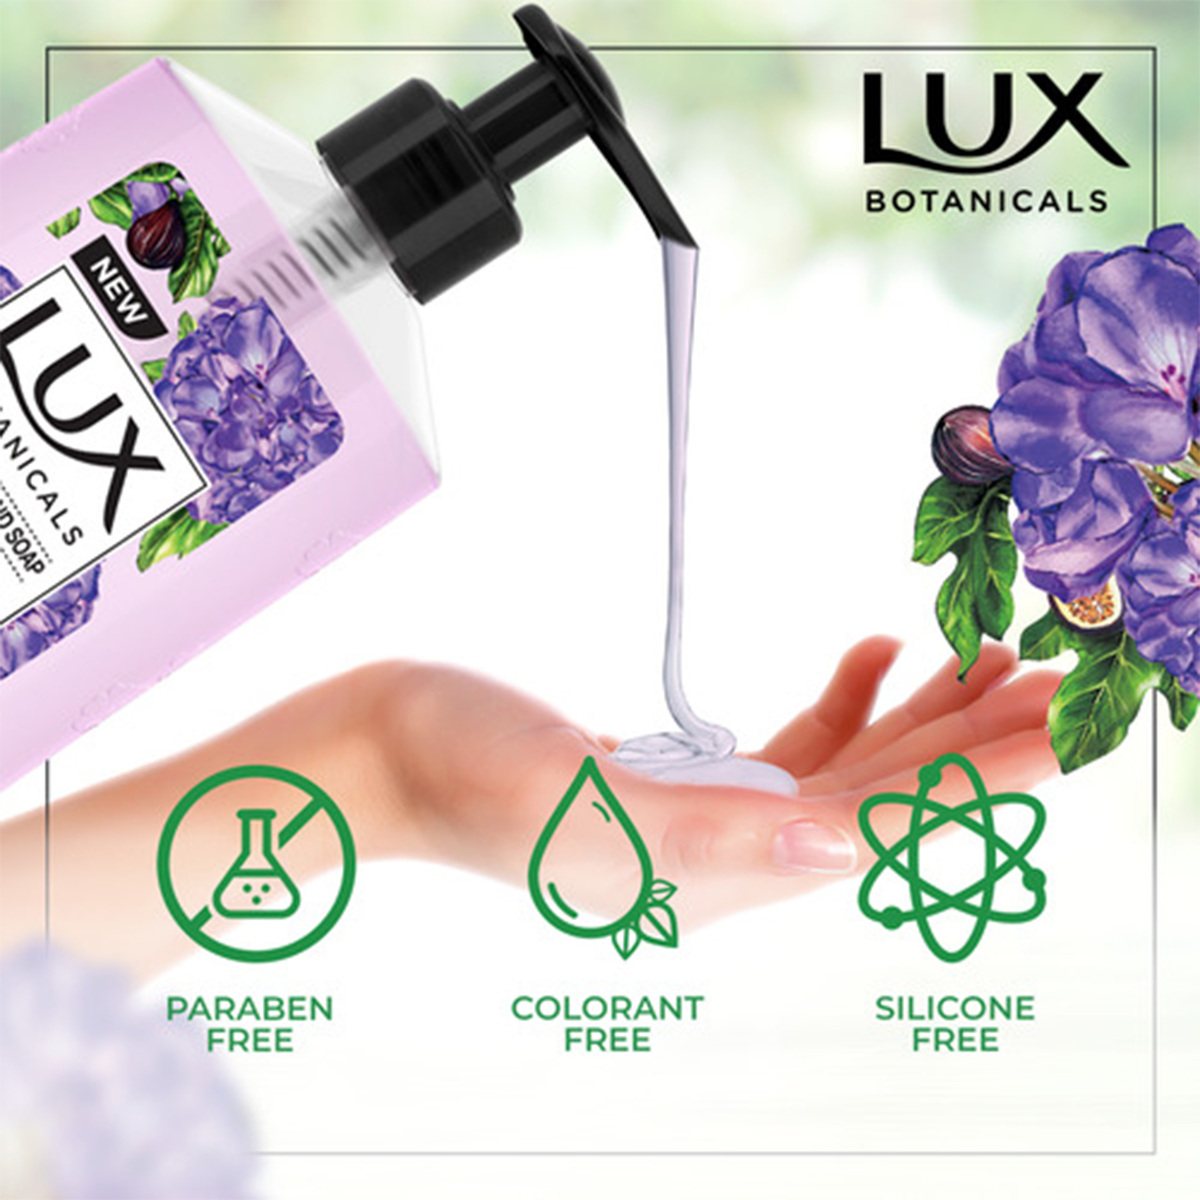 Lux Botanicals Skin Renewal Fig Extract & Geranium Oil 500 ml